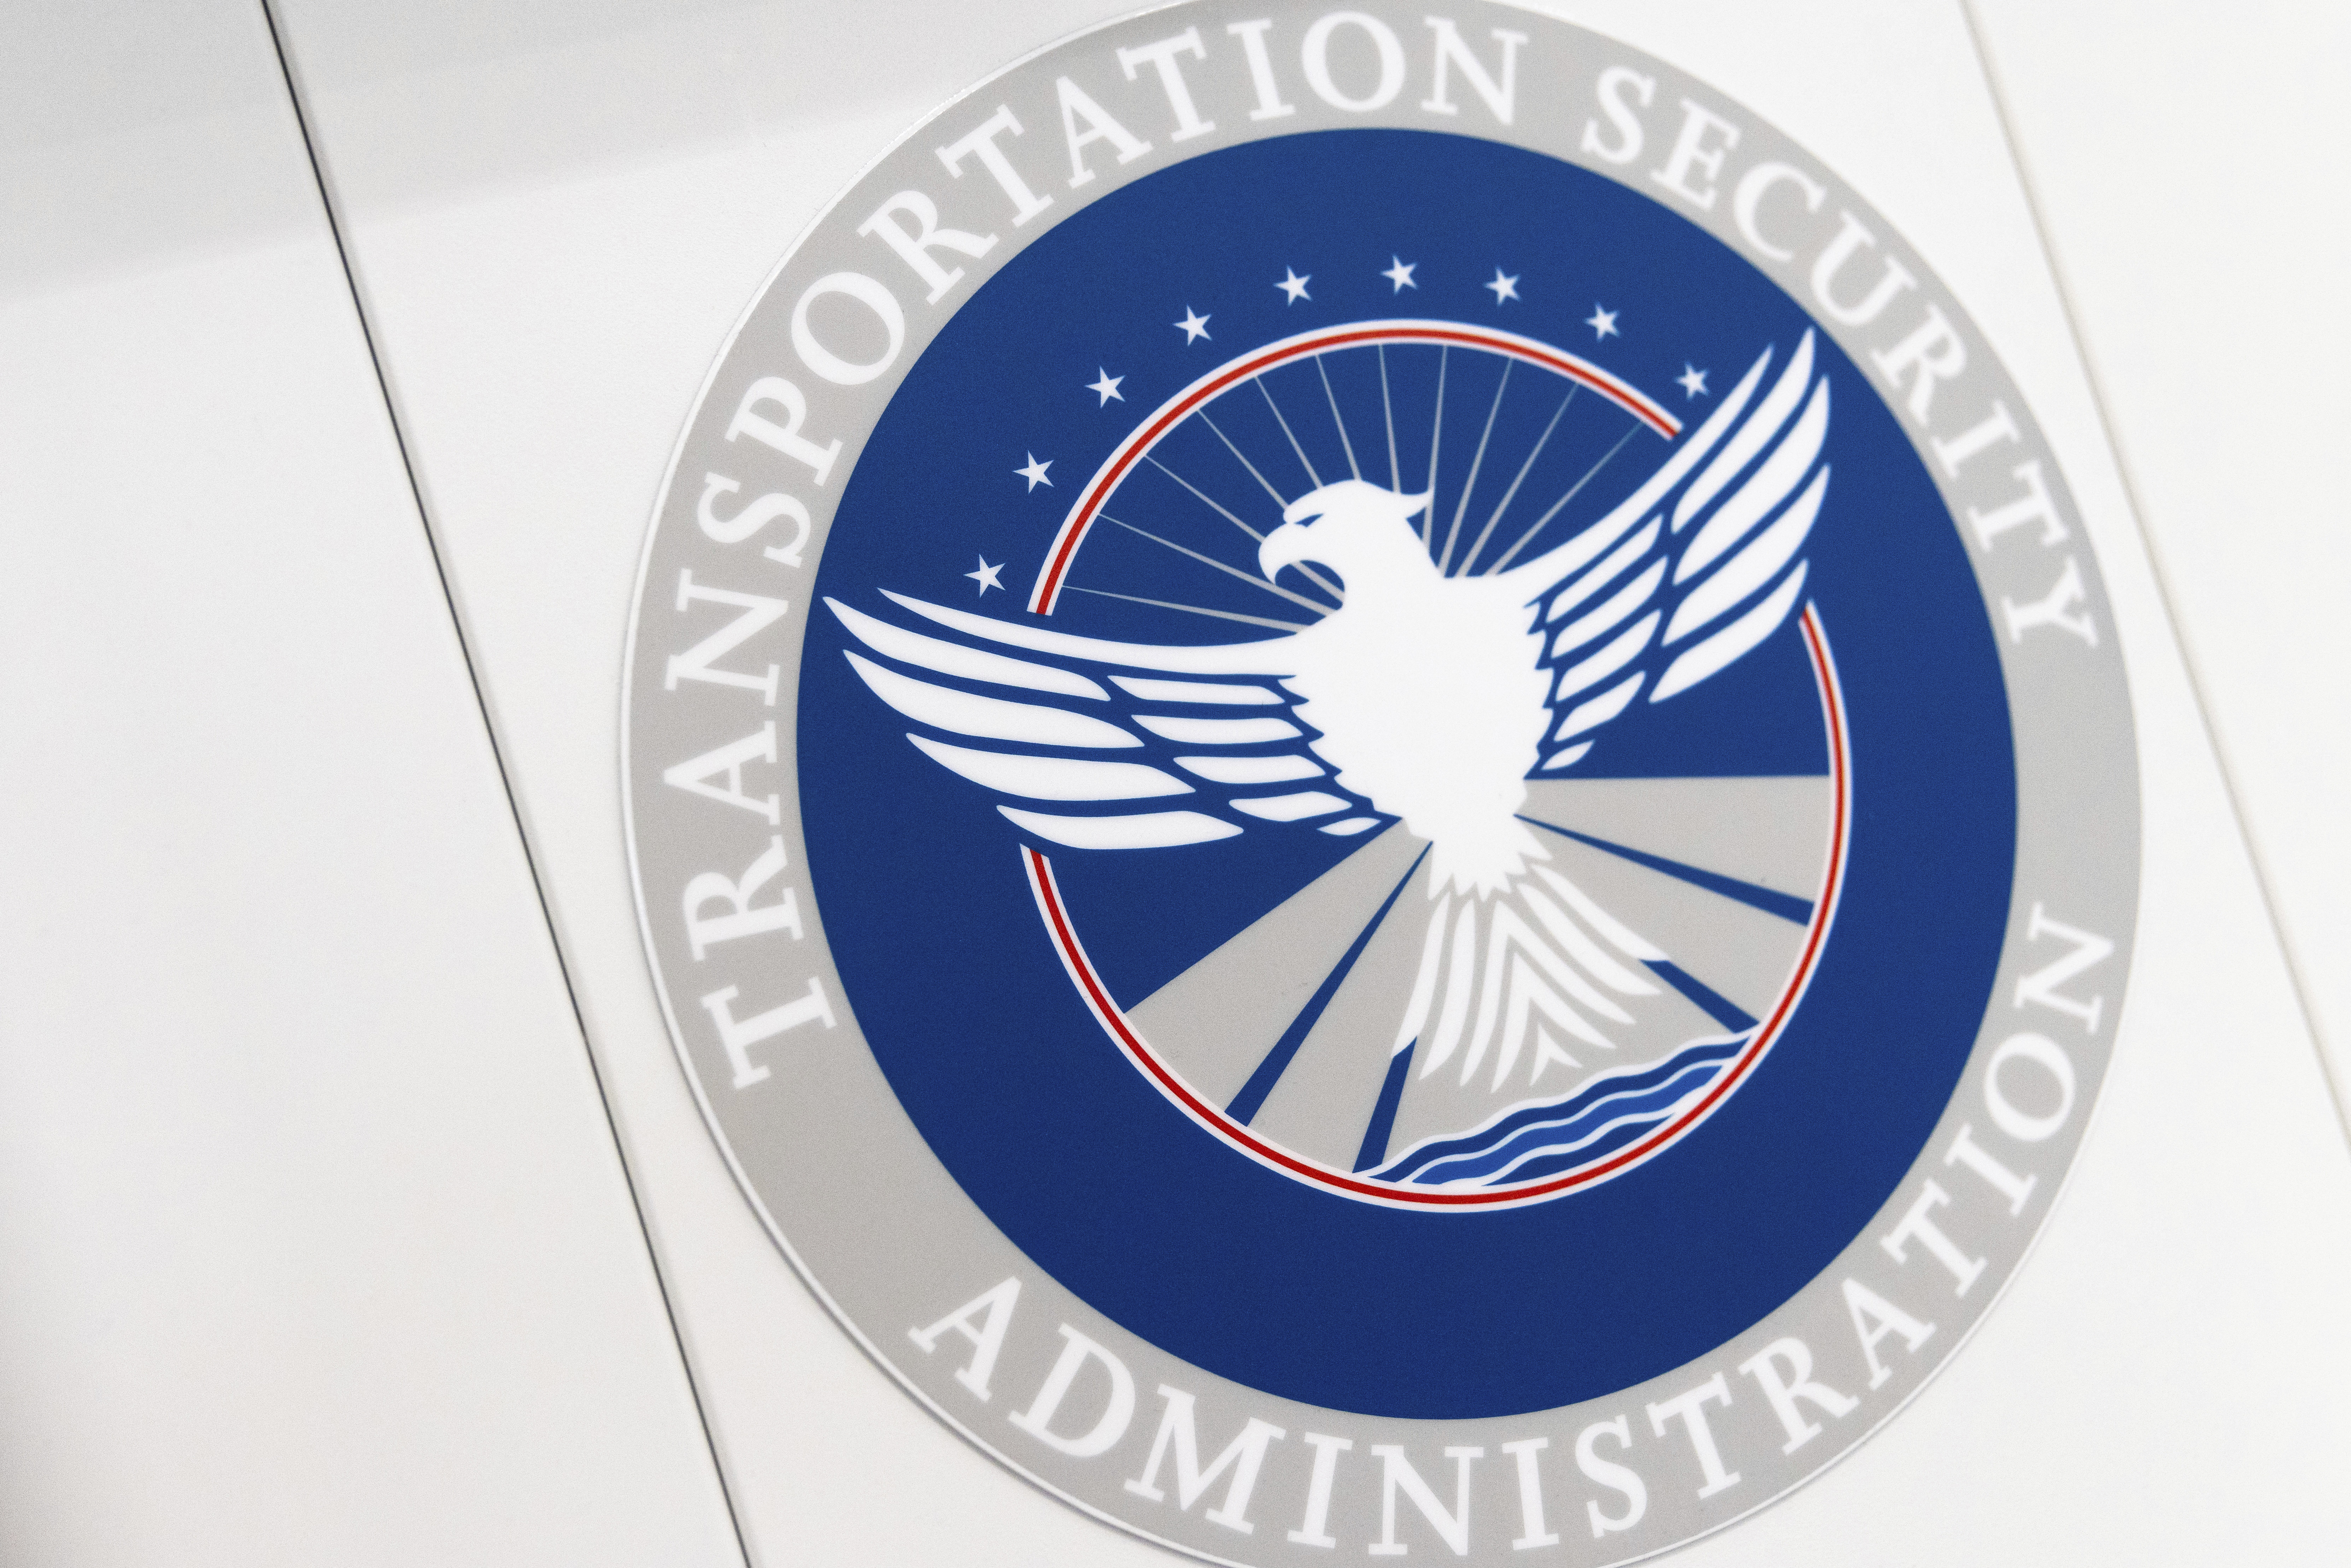 TSA Travel Tips Tuesday - Aerosols  Transportation Security Administration